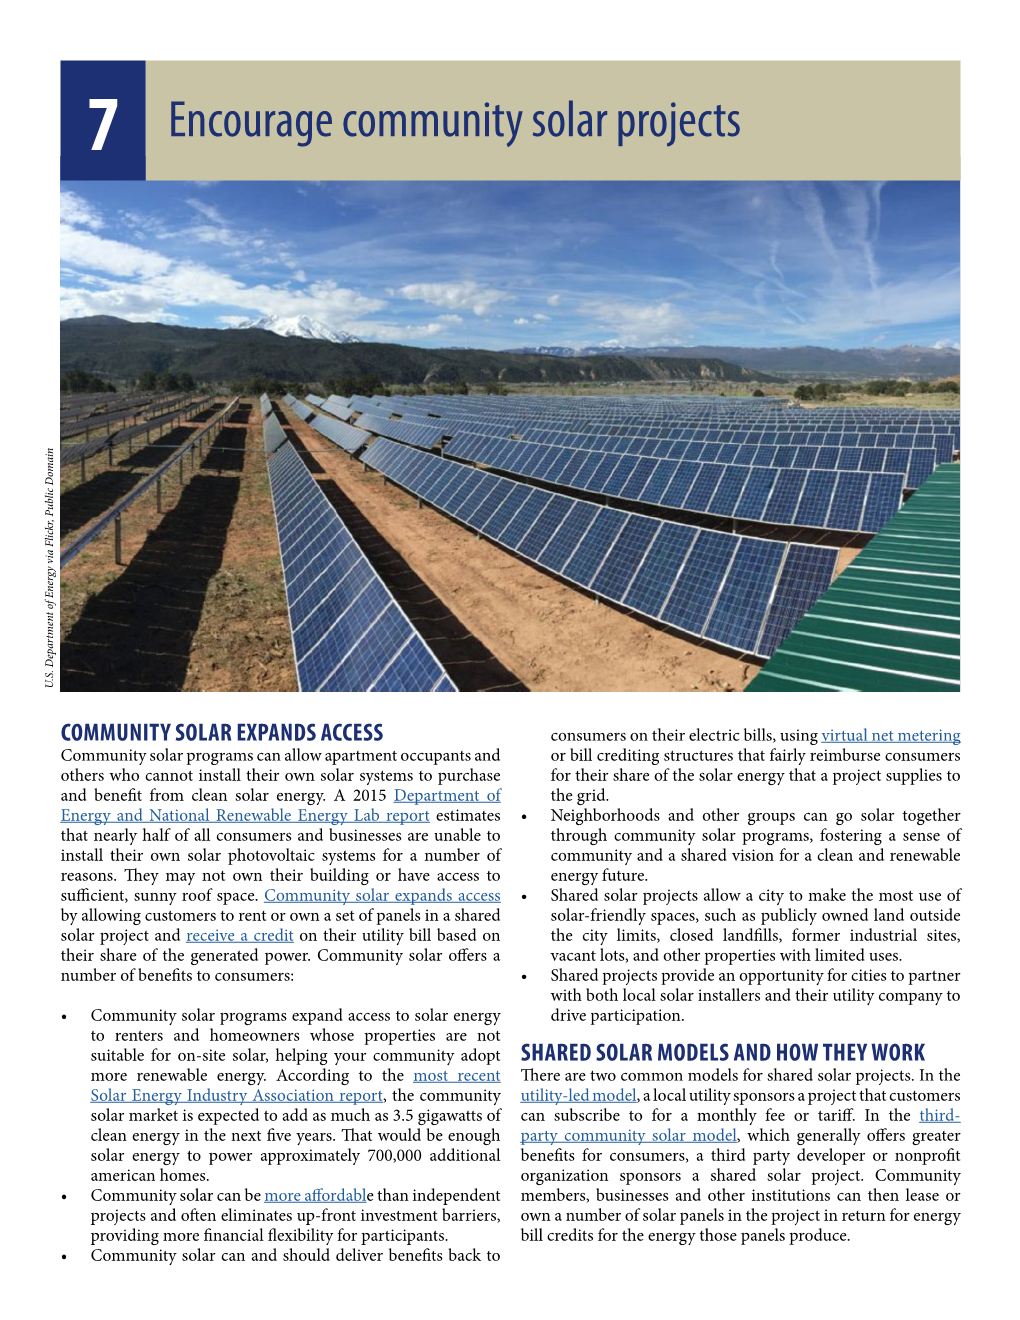 Encourage Community Solar Projects U.S